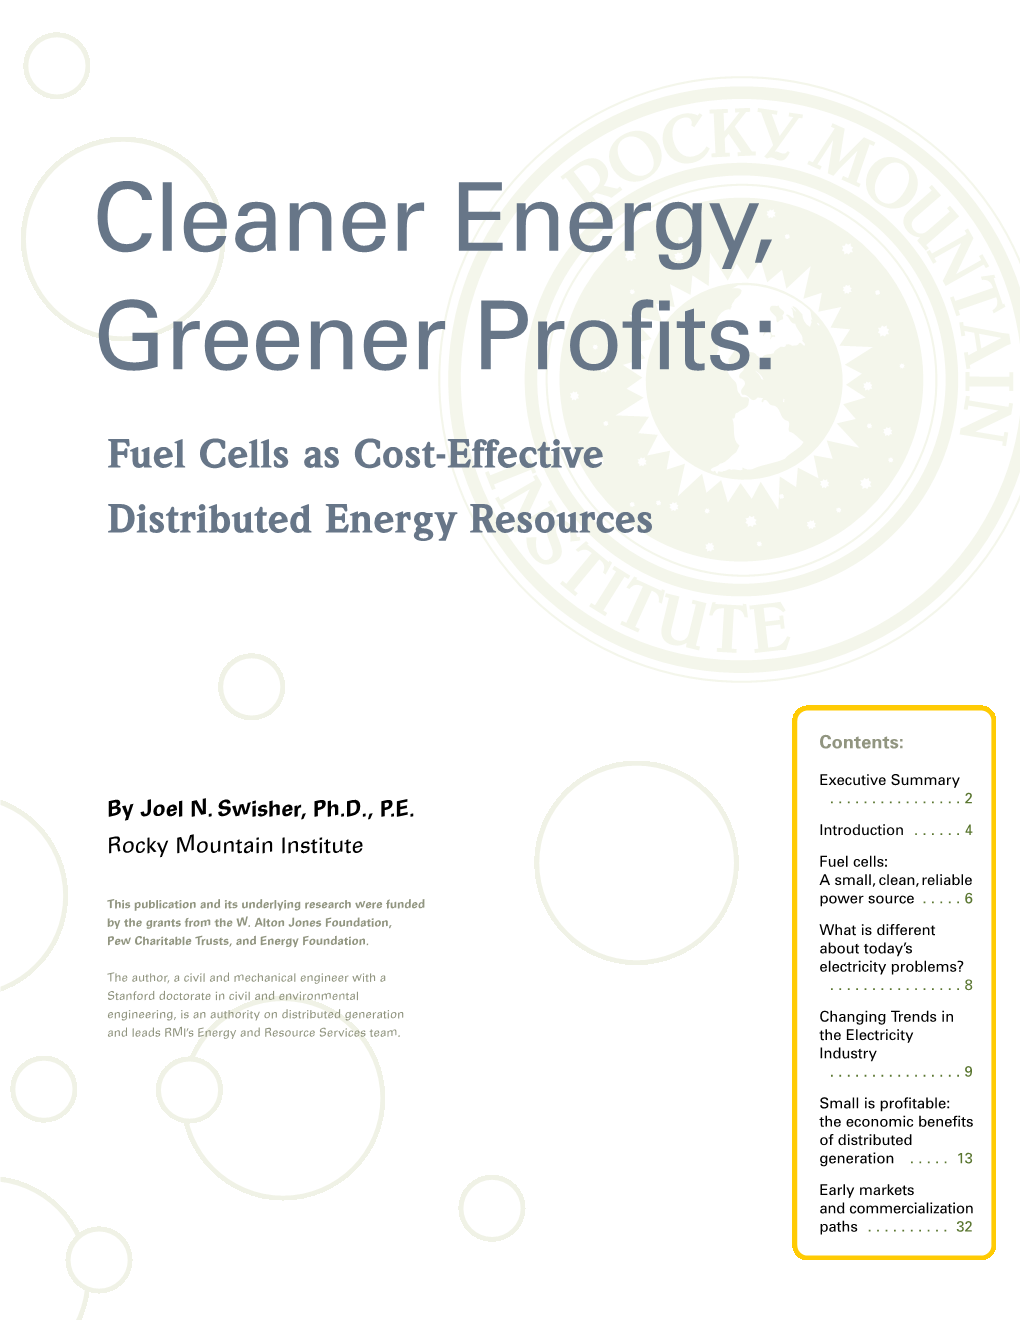 Cleaner Energy, Greener Profits